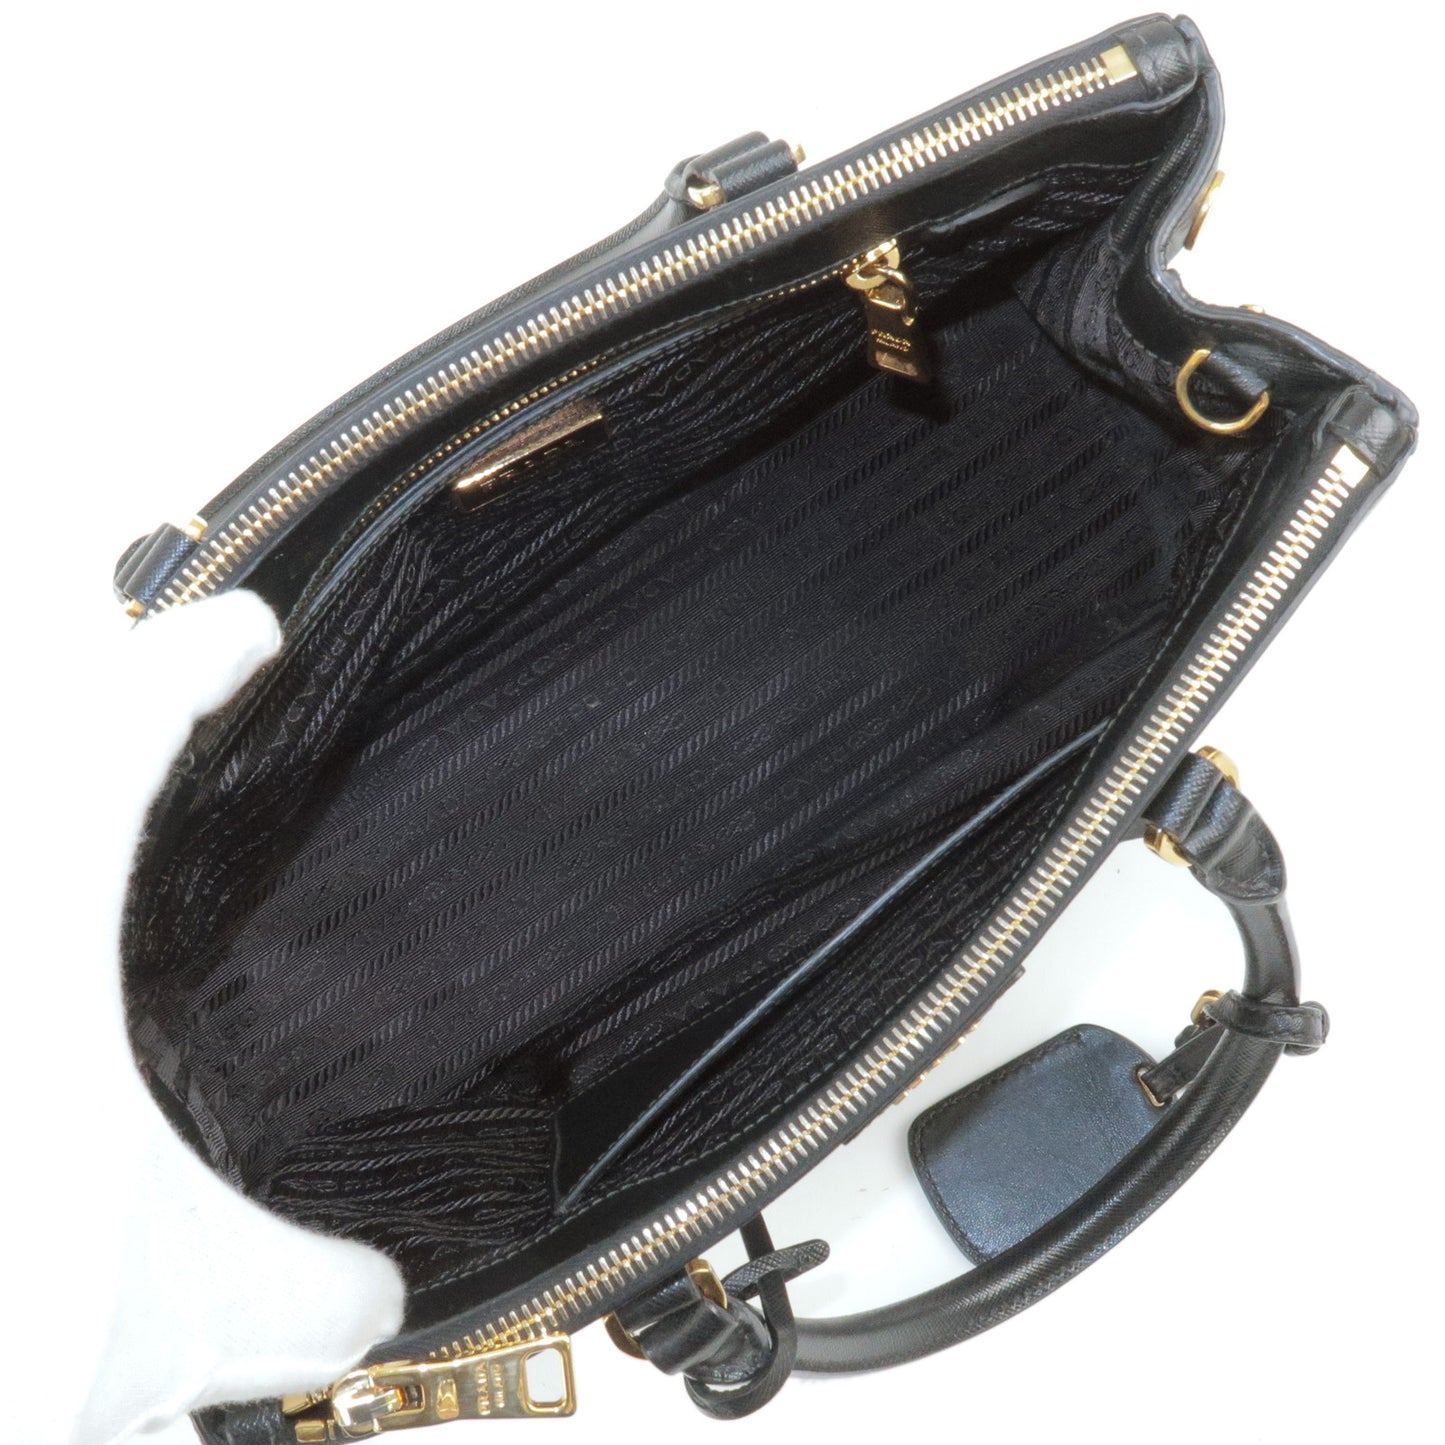 PRADA Leather 2Way Hand Bag Shoulder Bag NERO Black BN1801